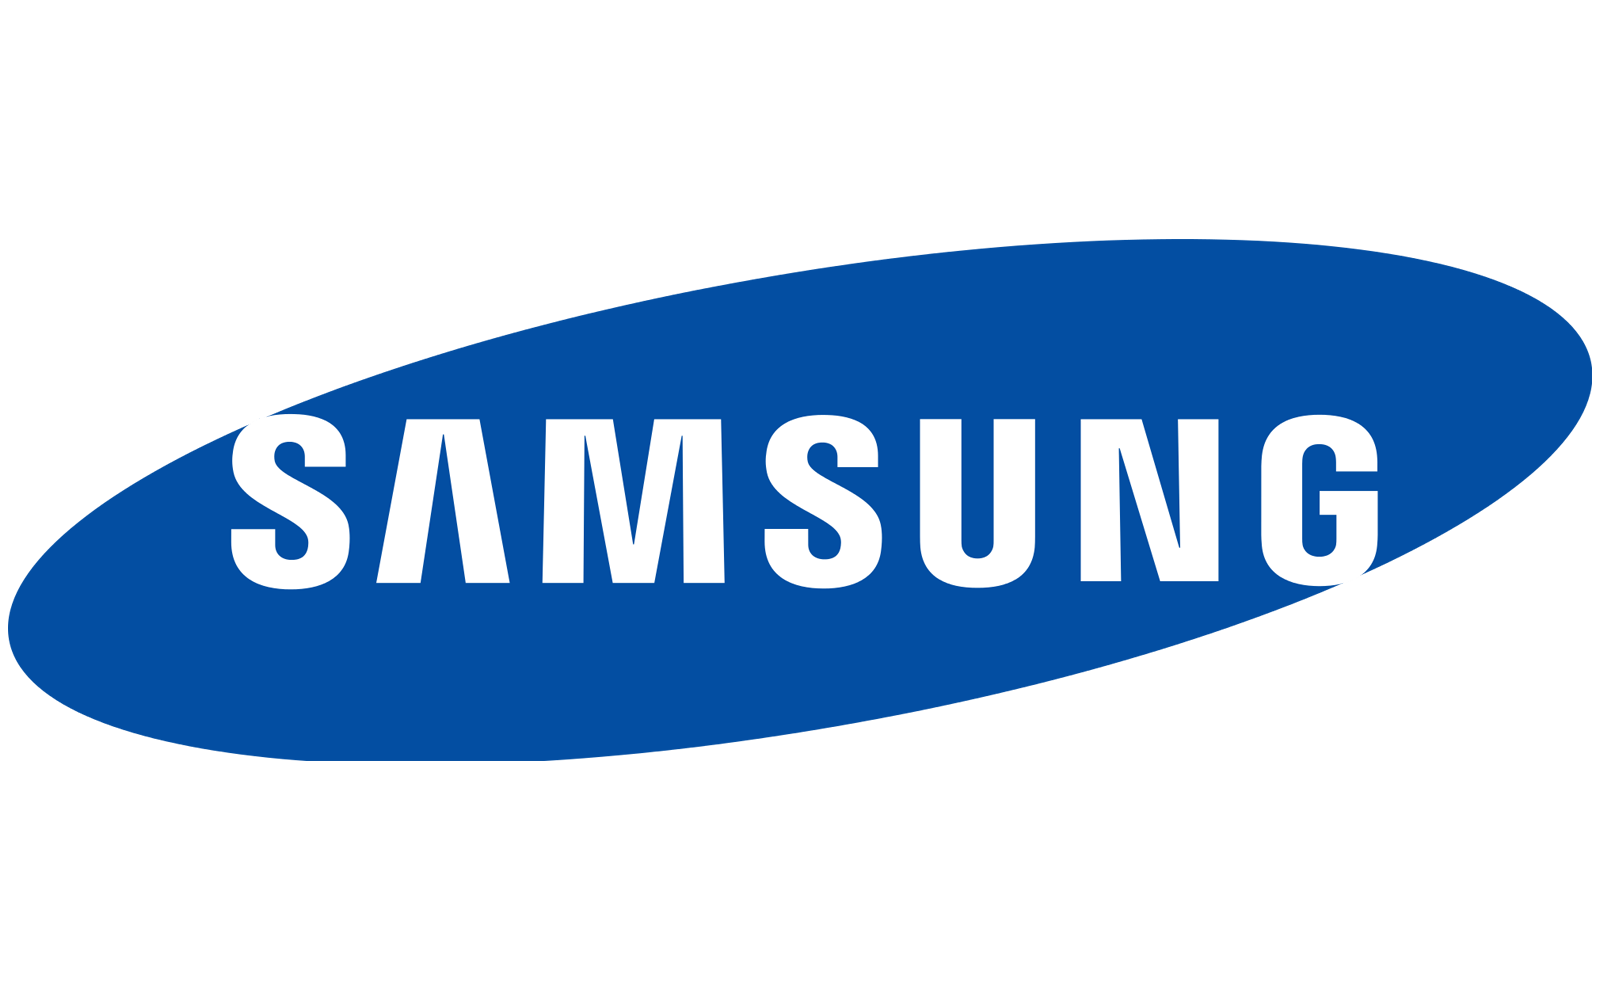 Samsung T9 2To (MU-PG2T0B/EU) - Achat / Vente Disque SSD externe sur